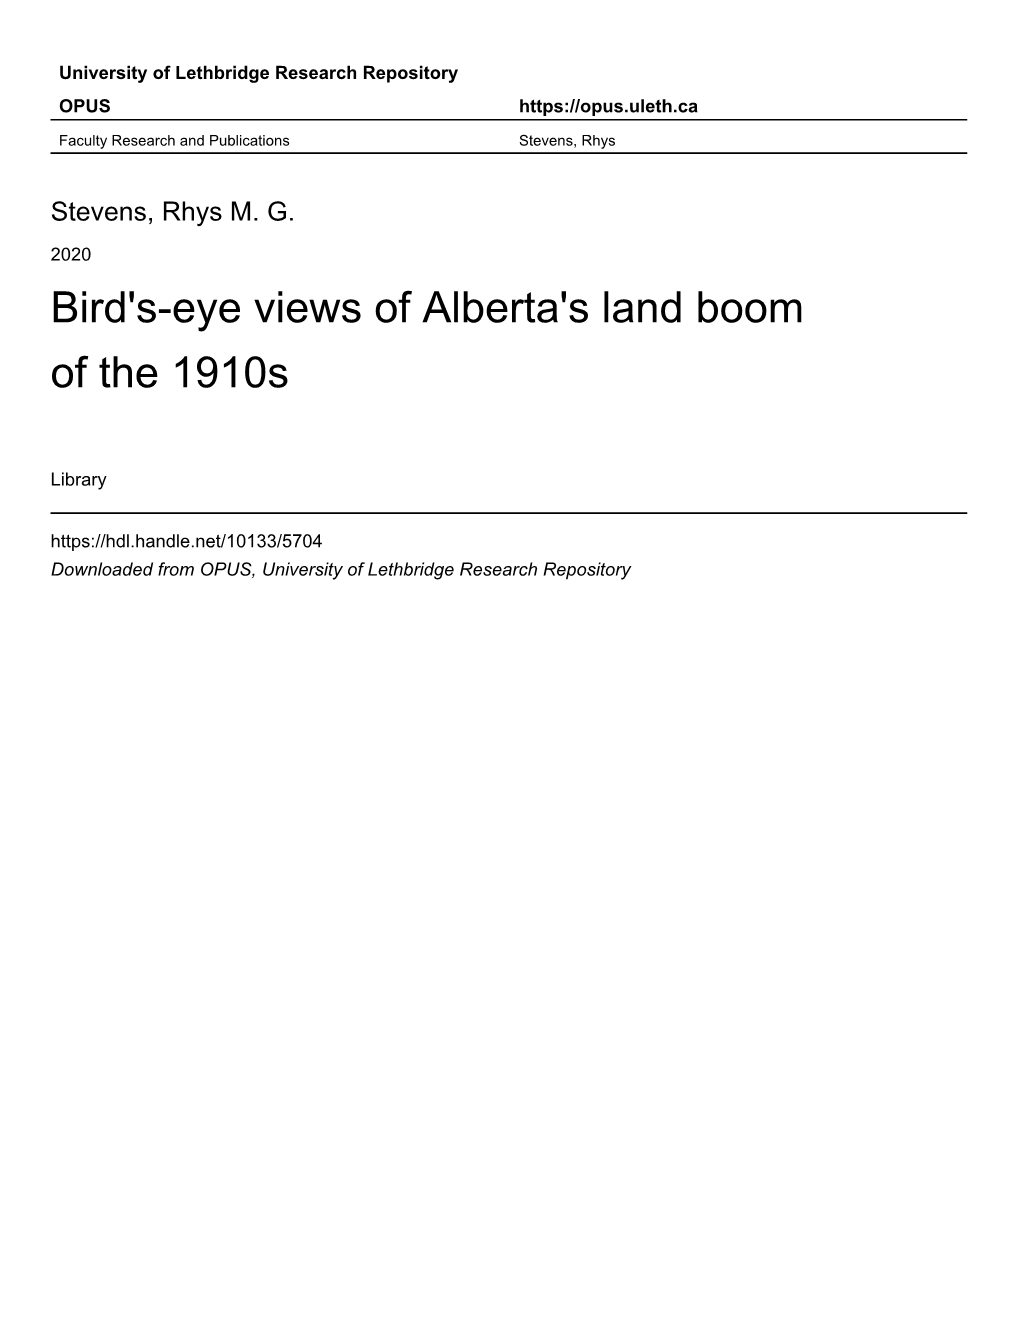 Bird's-Eye Views of Alberta's Land Boom of the 1910S